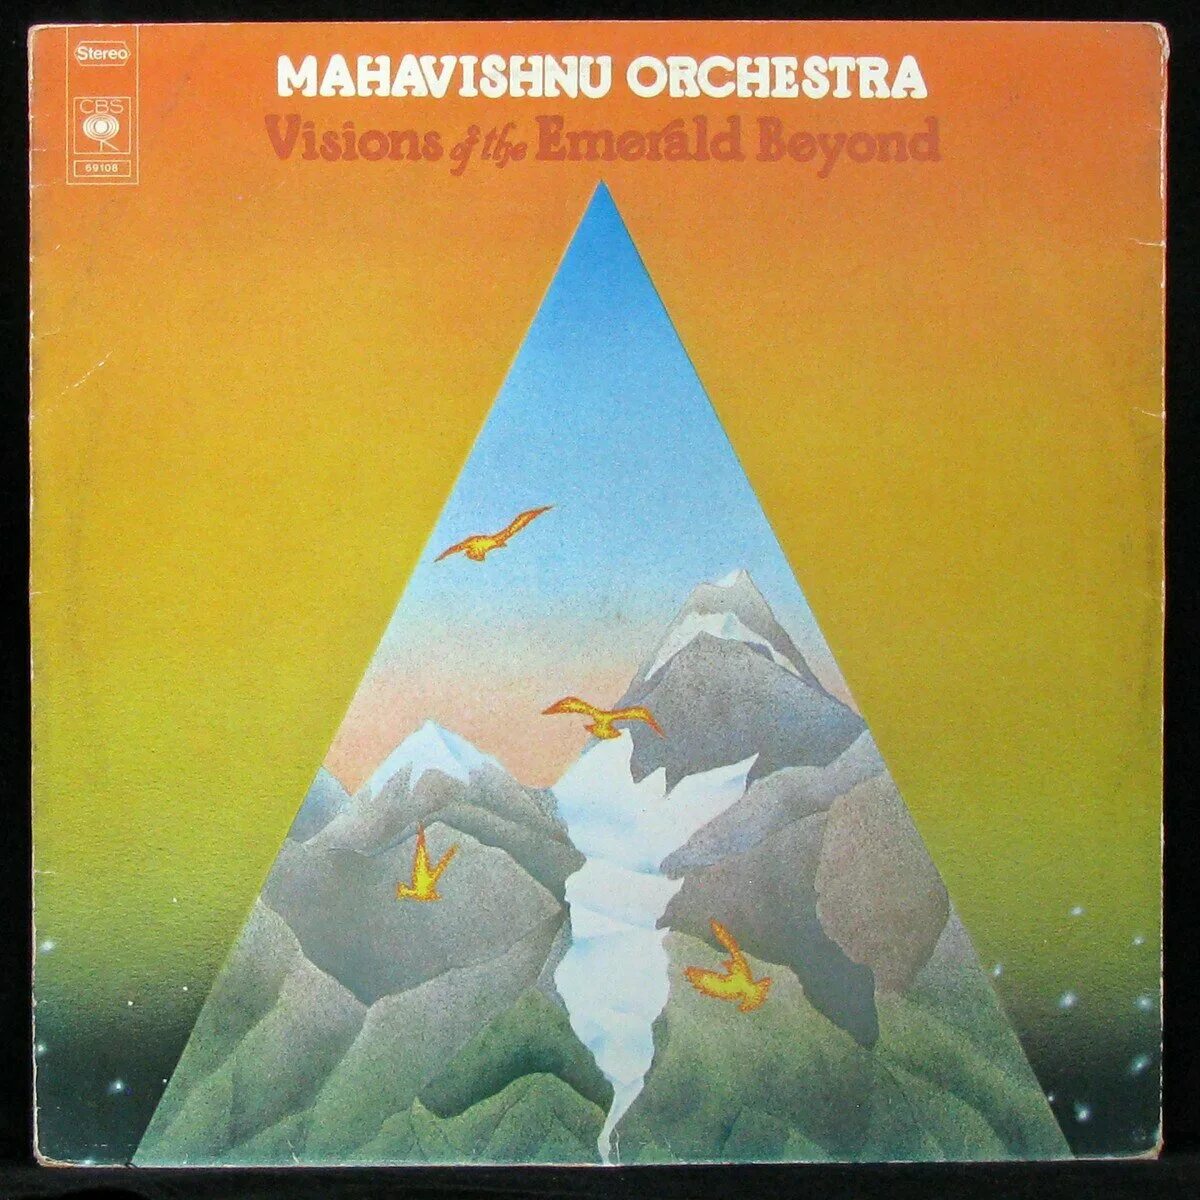 Mahavishnu orchestra. Картинки групп the Mahavishnu Orchestra. Mahavishnu Orchestra Faith. Mahavishnu Orchestra Apocalypse. Mahavi.